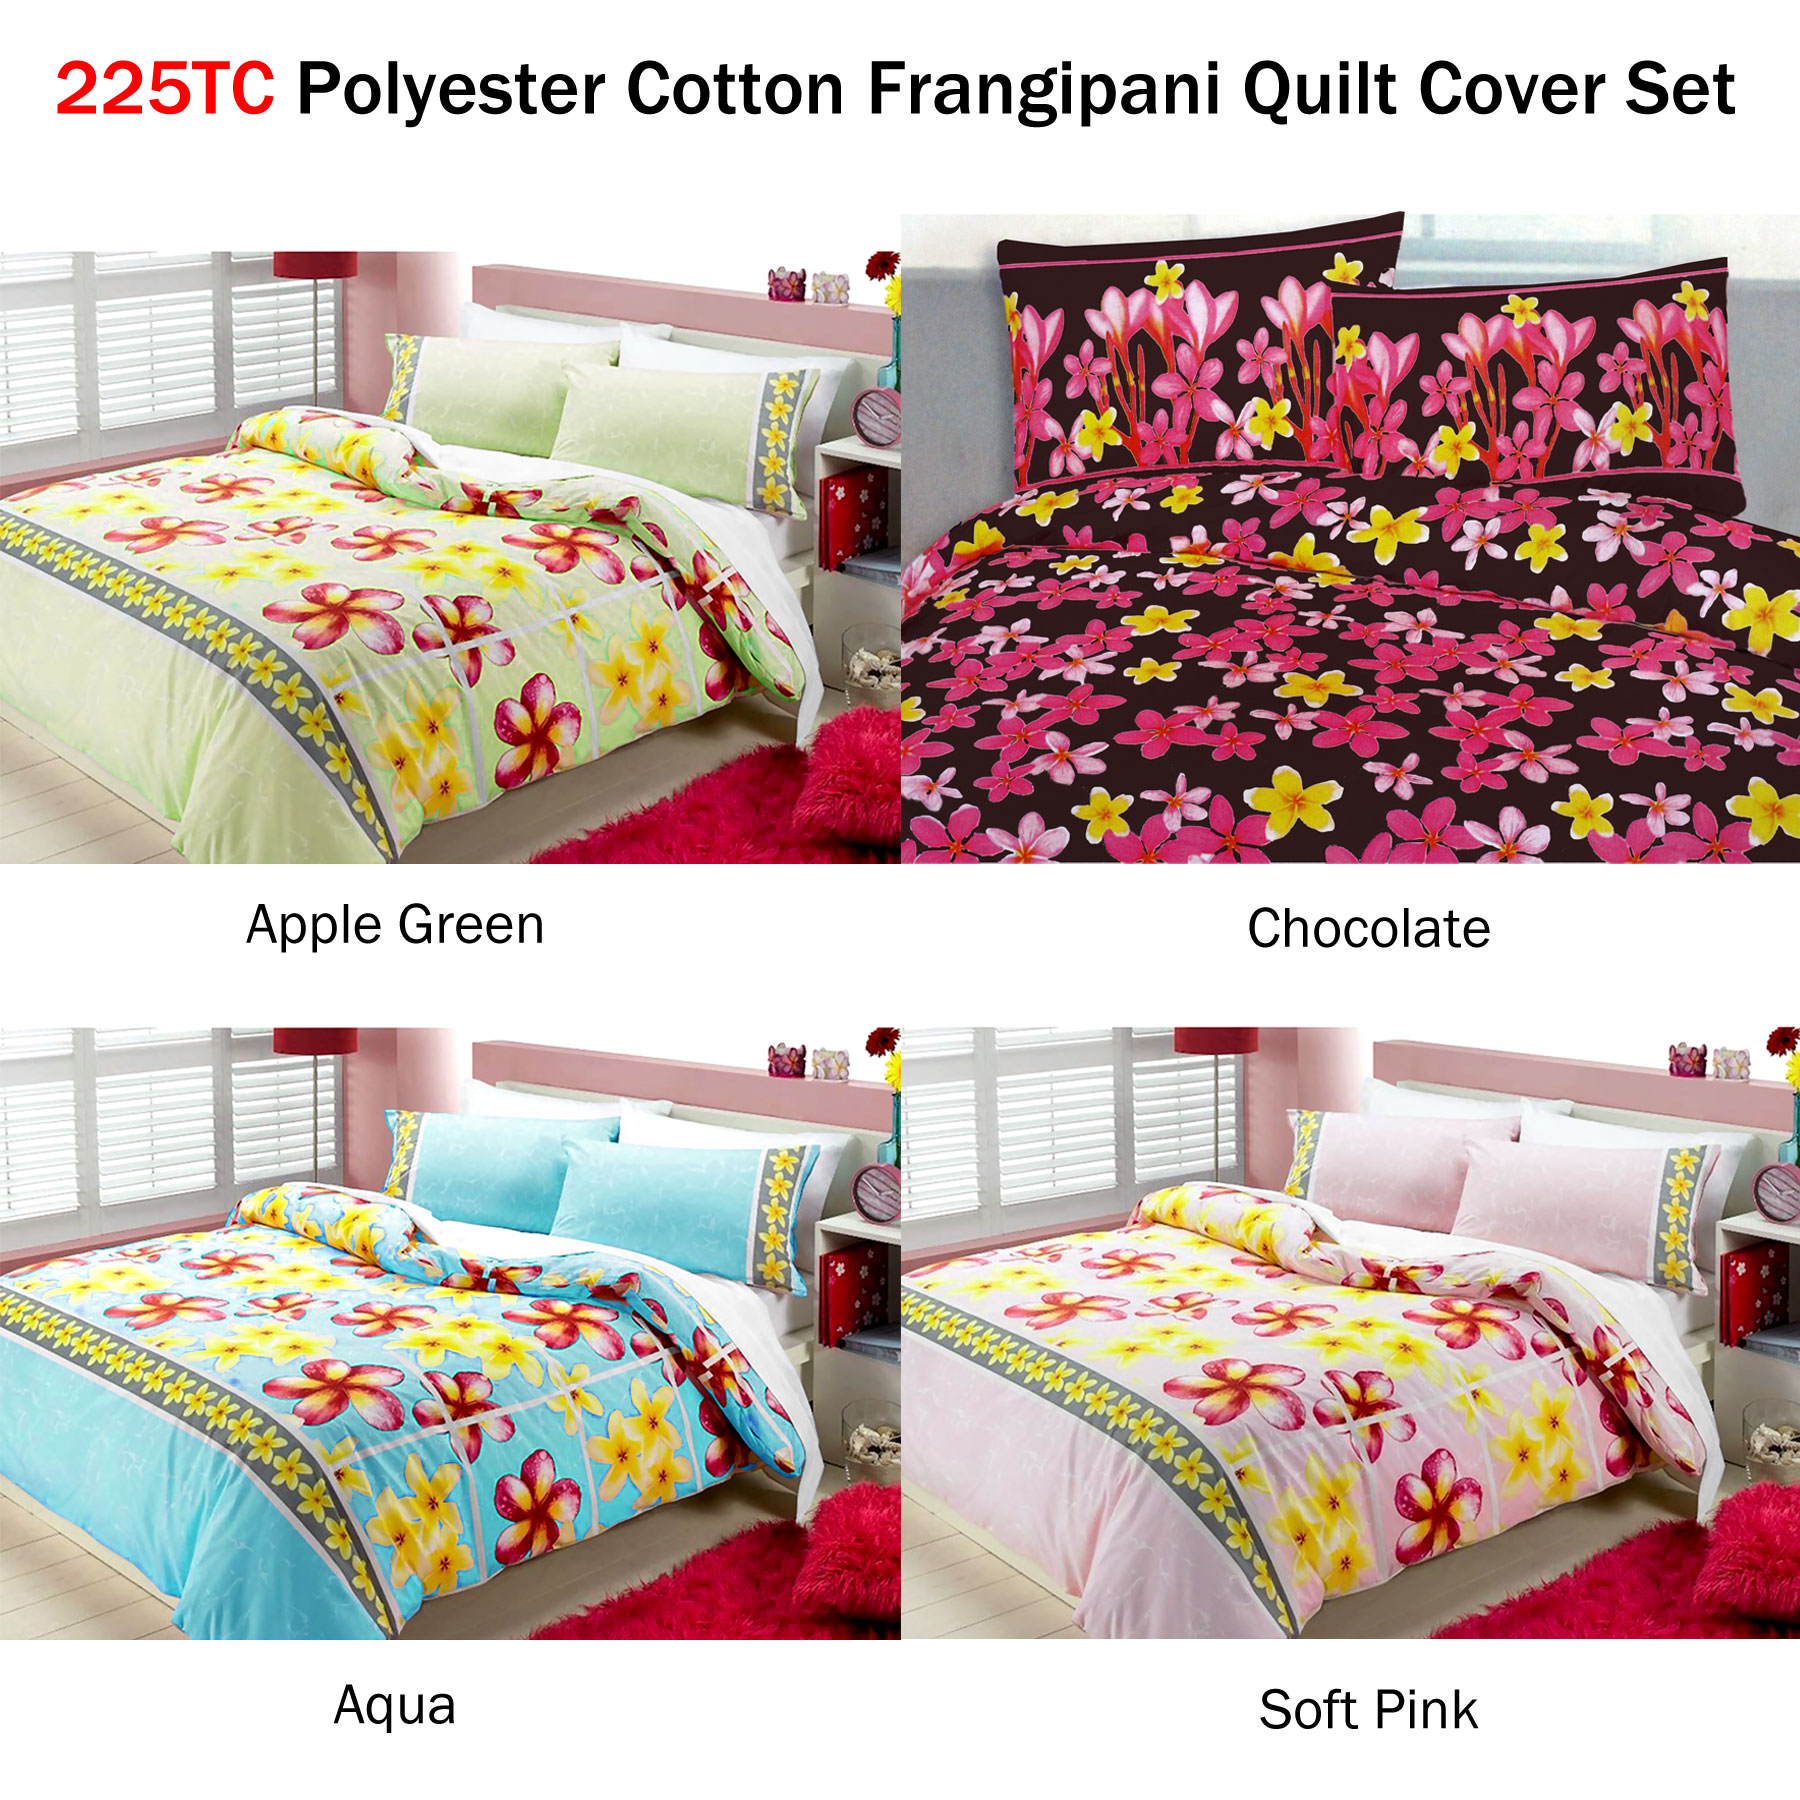 2 Pce 225tc Polyester Cotton Frangipani Quilt Cover Set Single Ebay